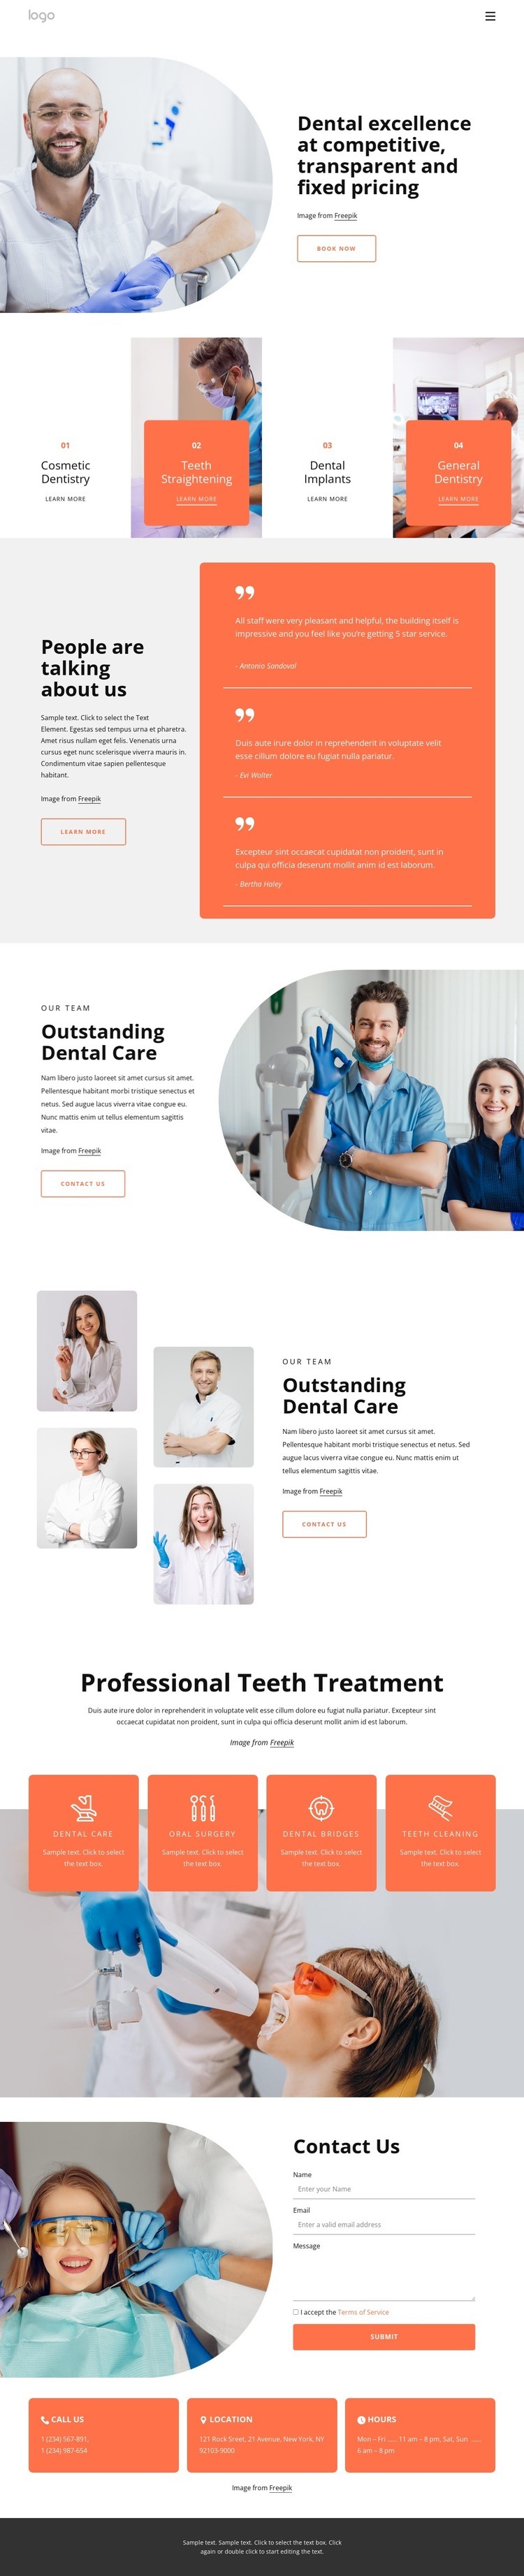 Dental excellence Web Page Design